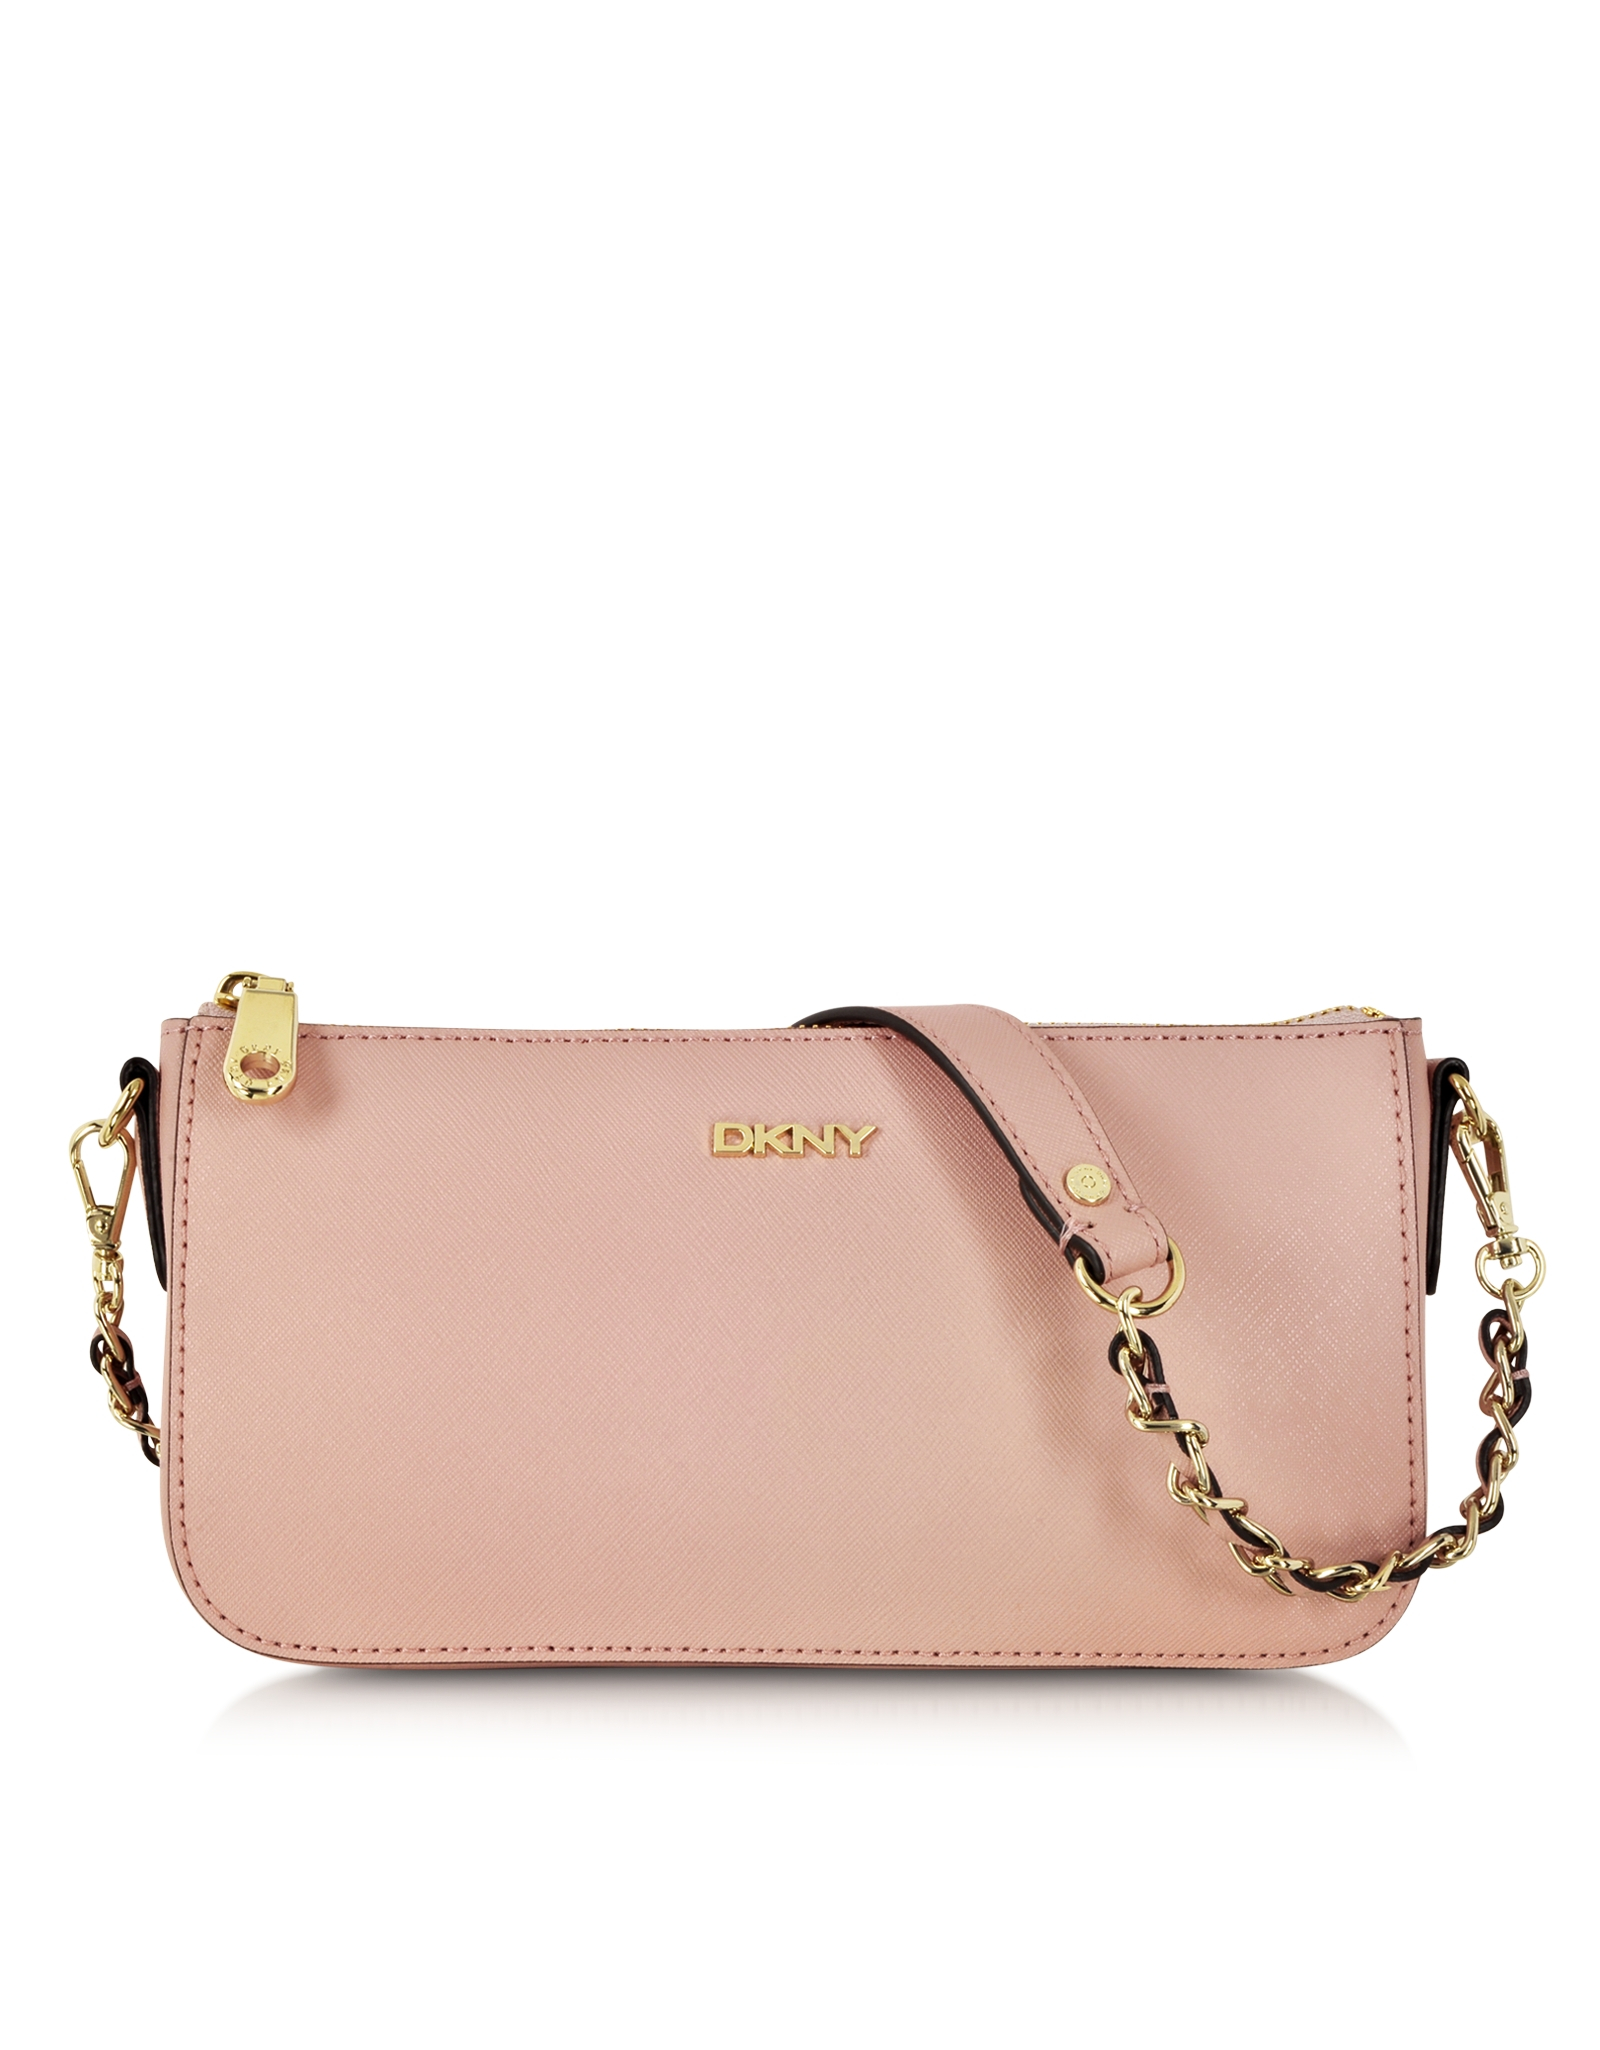 DKNY Bryant Park Blush Saffiano Leather Crossbody Bag in Pink - Lyst